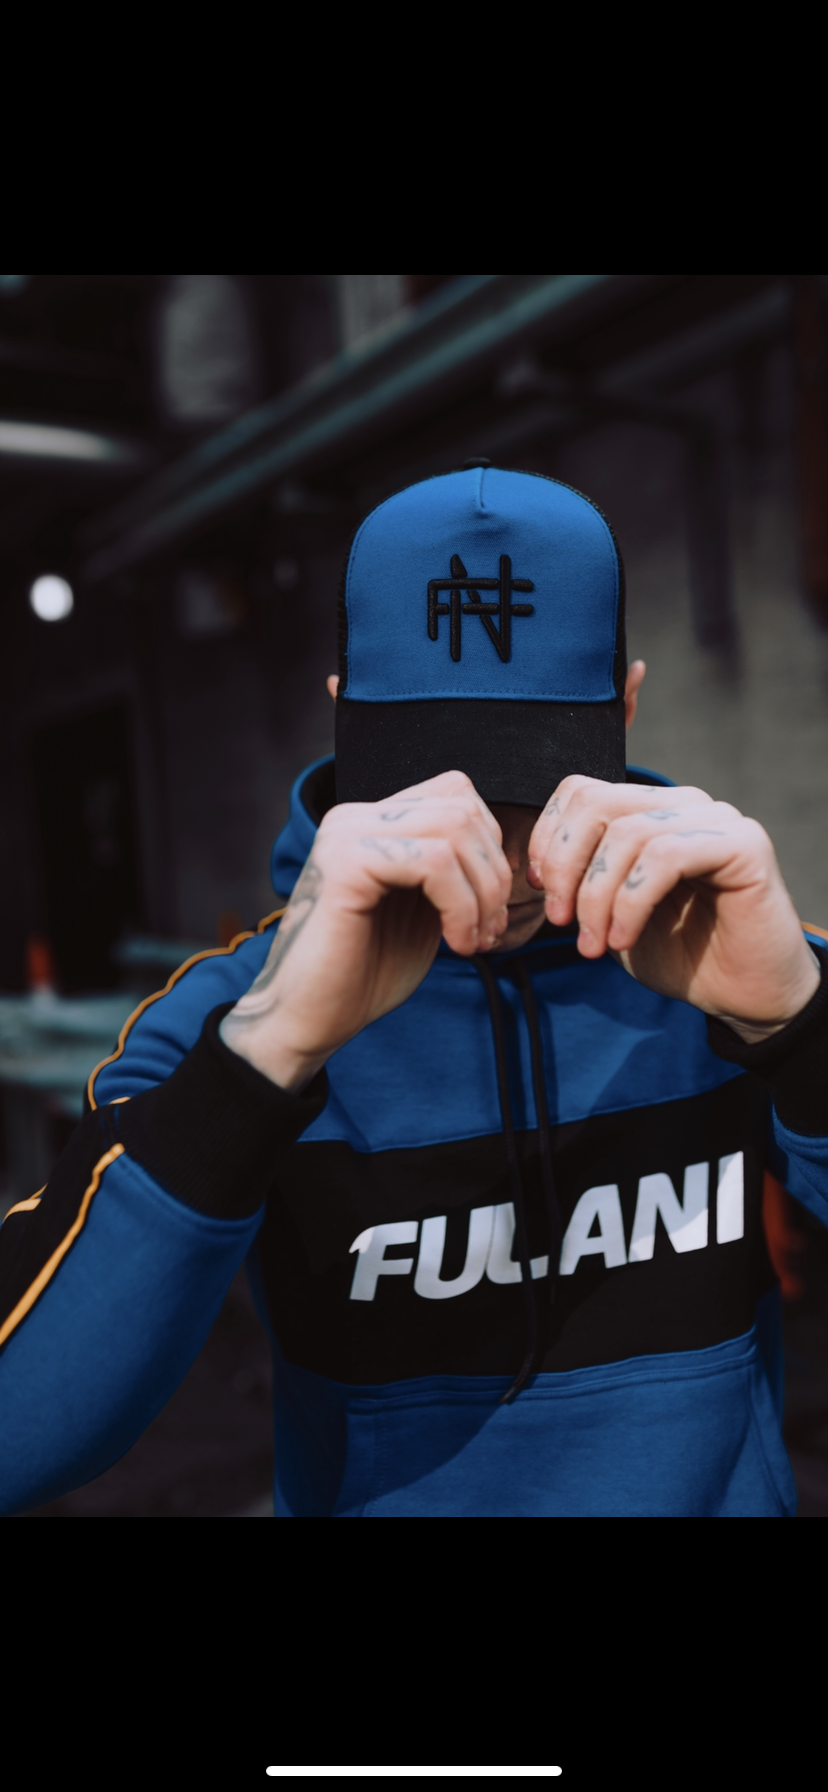 courtney black | FN Cap Blue & Black | Cool and Trendy Baseball Cap | FULANI